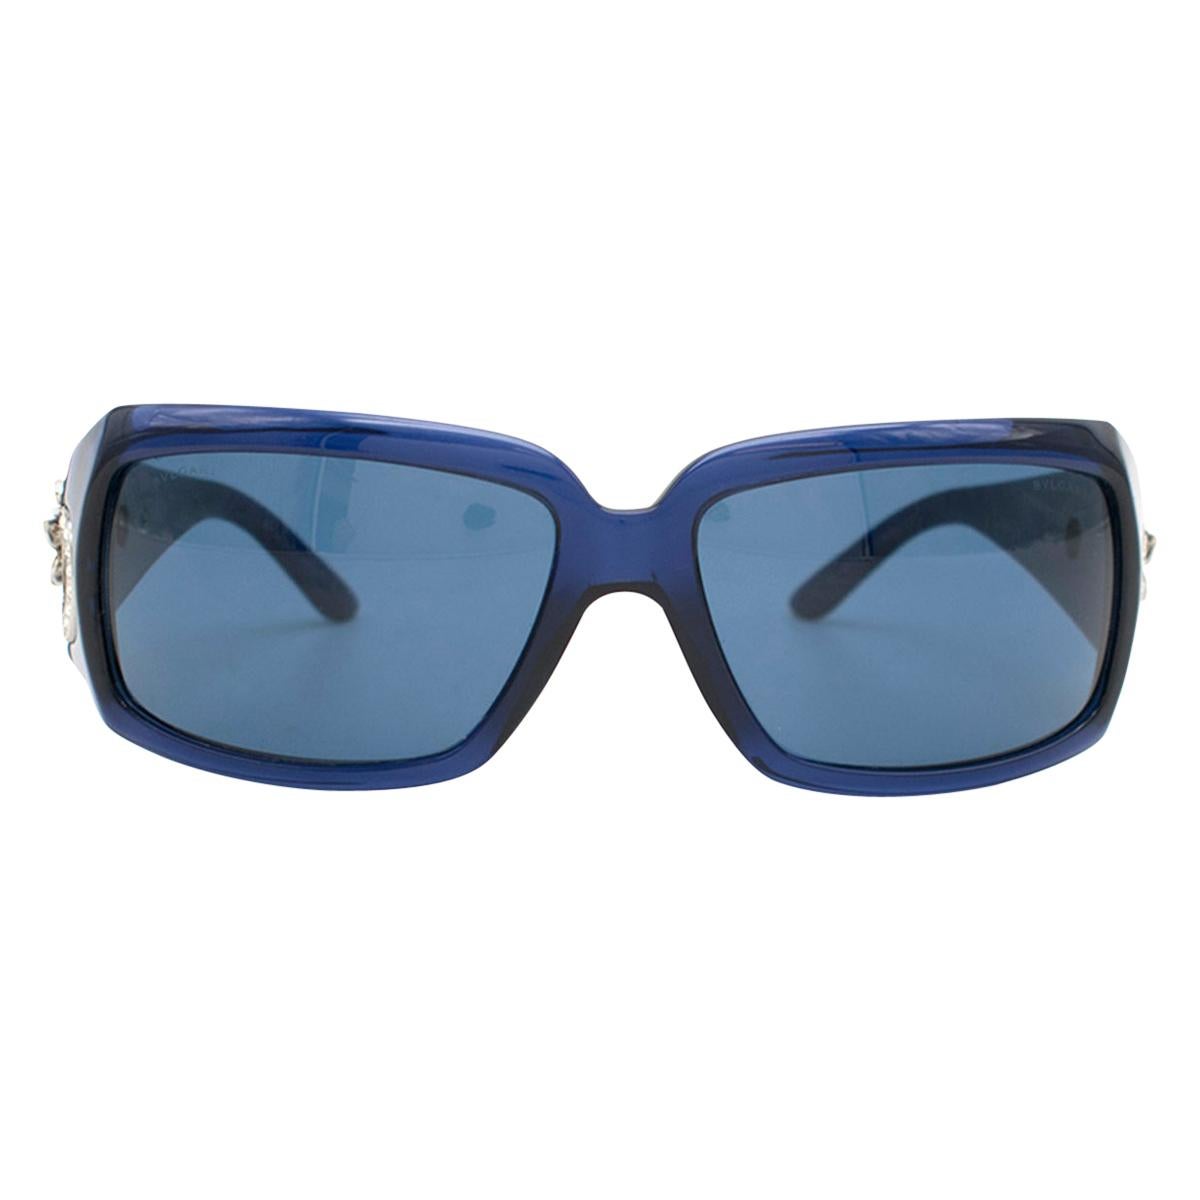 Bvlgari Blue Swarovski Crystal Embellished Sunglasses